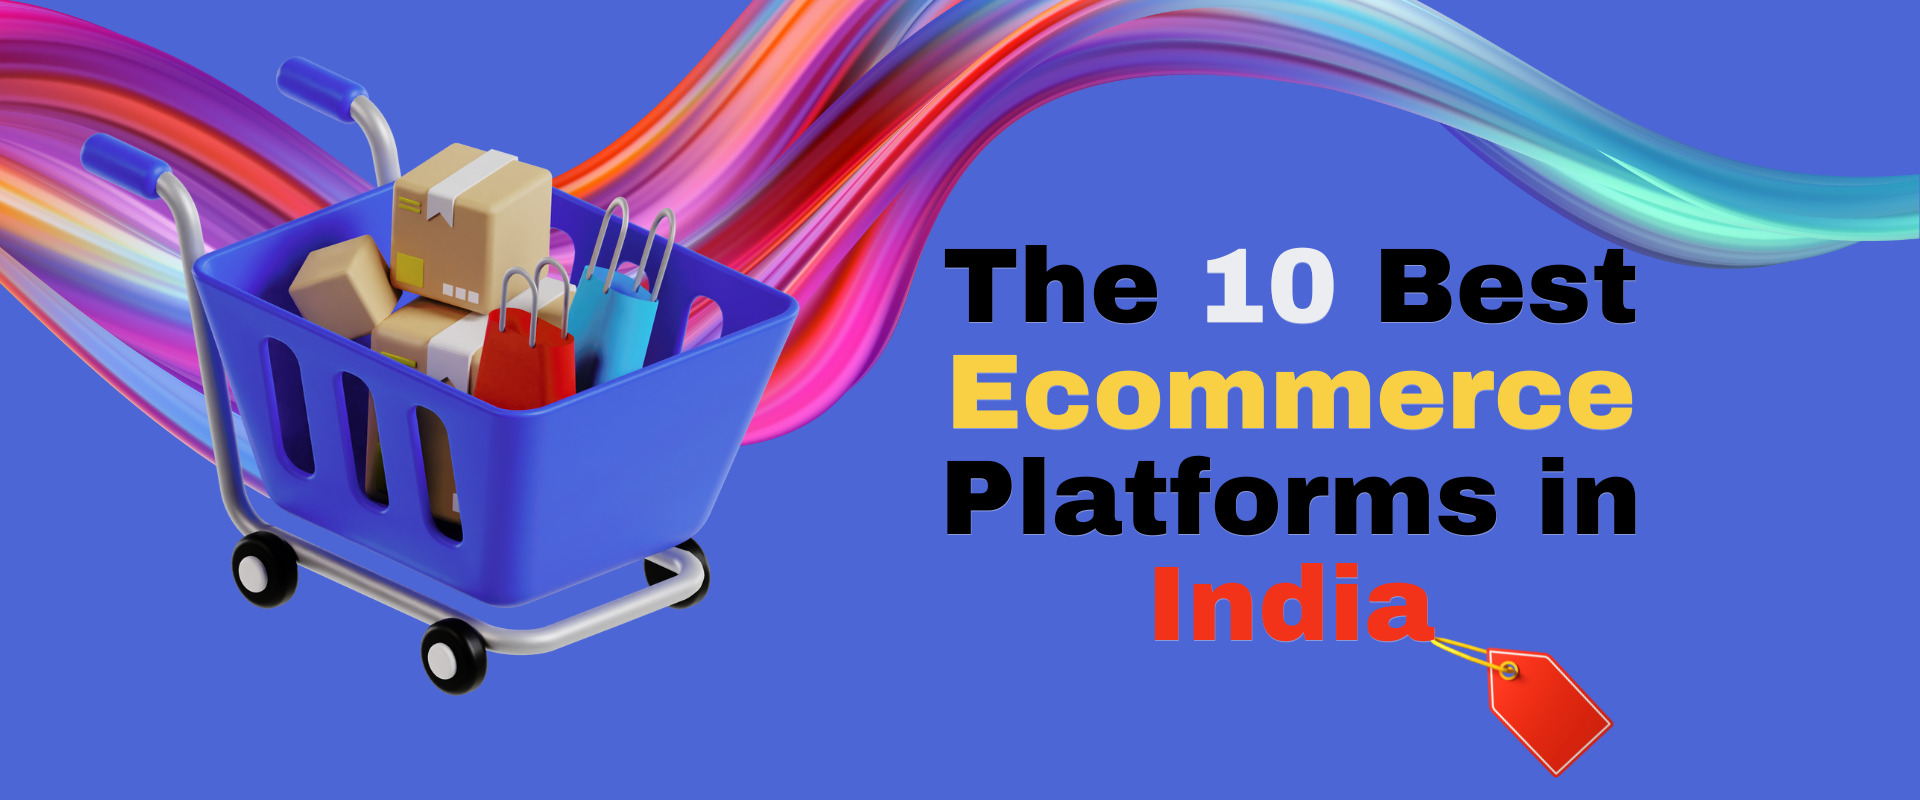 Top 10 Best Ecommerce Platforms in India